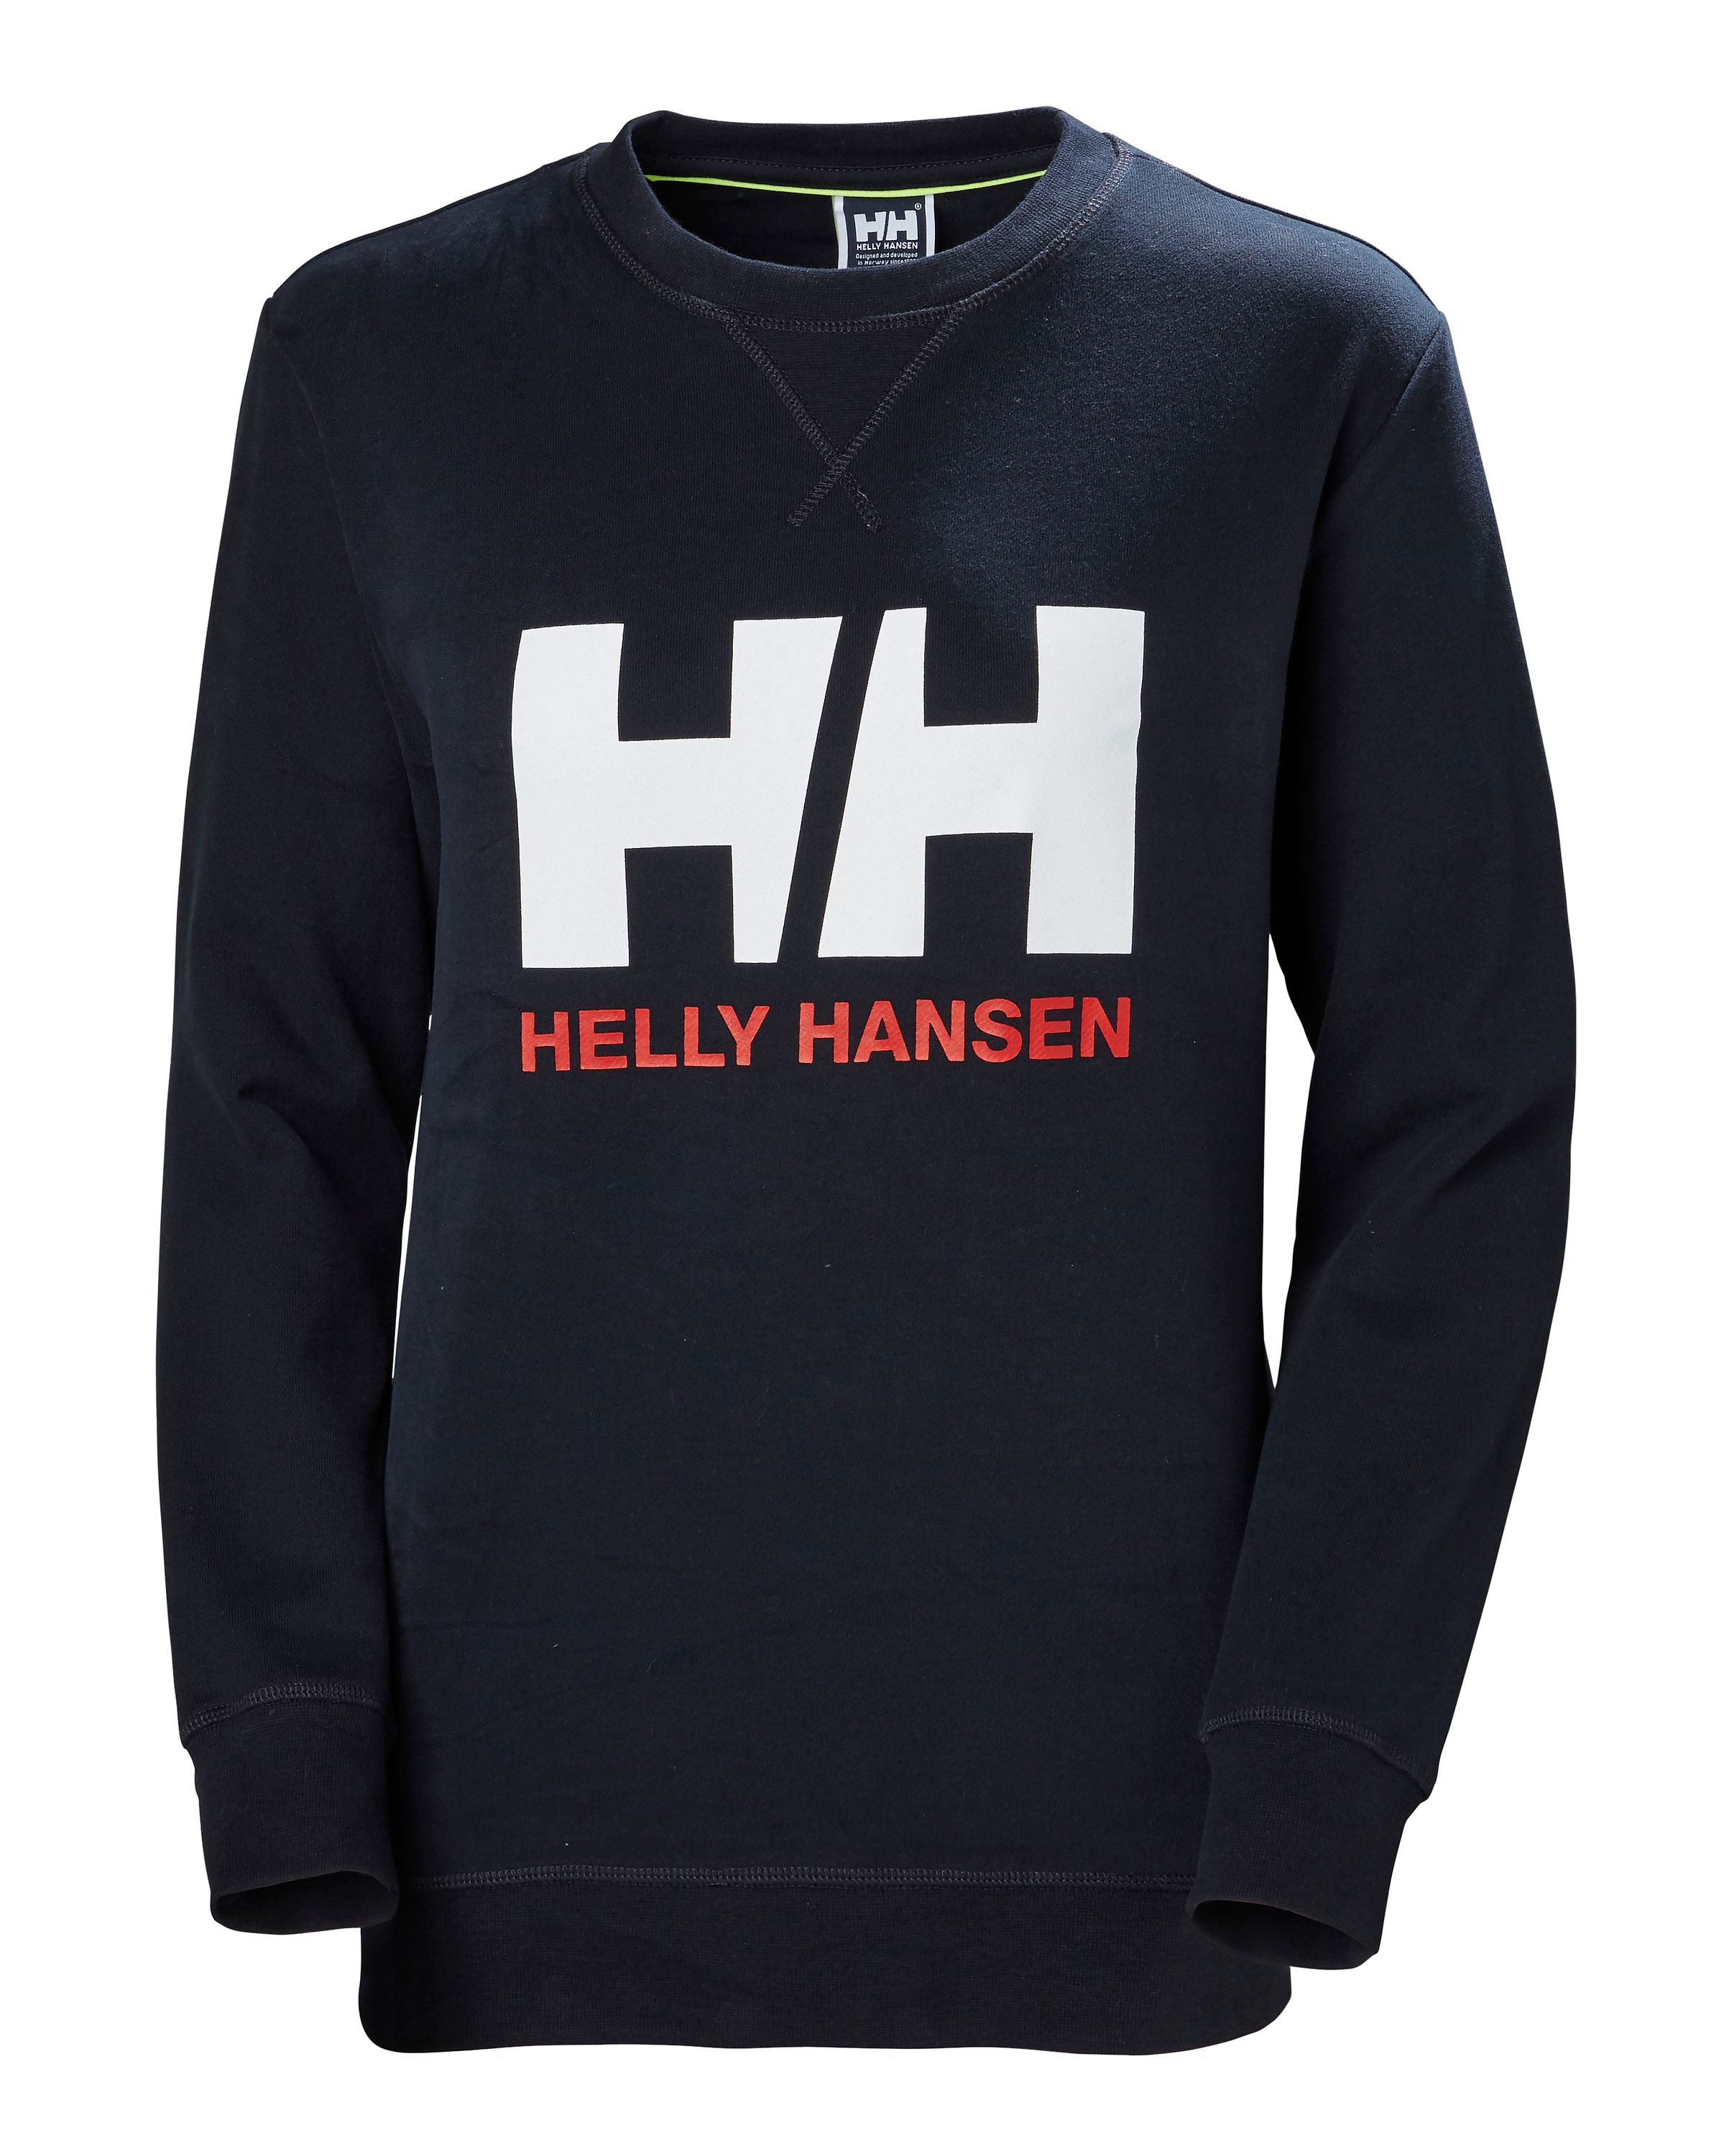 Helly hansen sweatshirt crew navy strl s